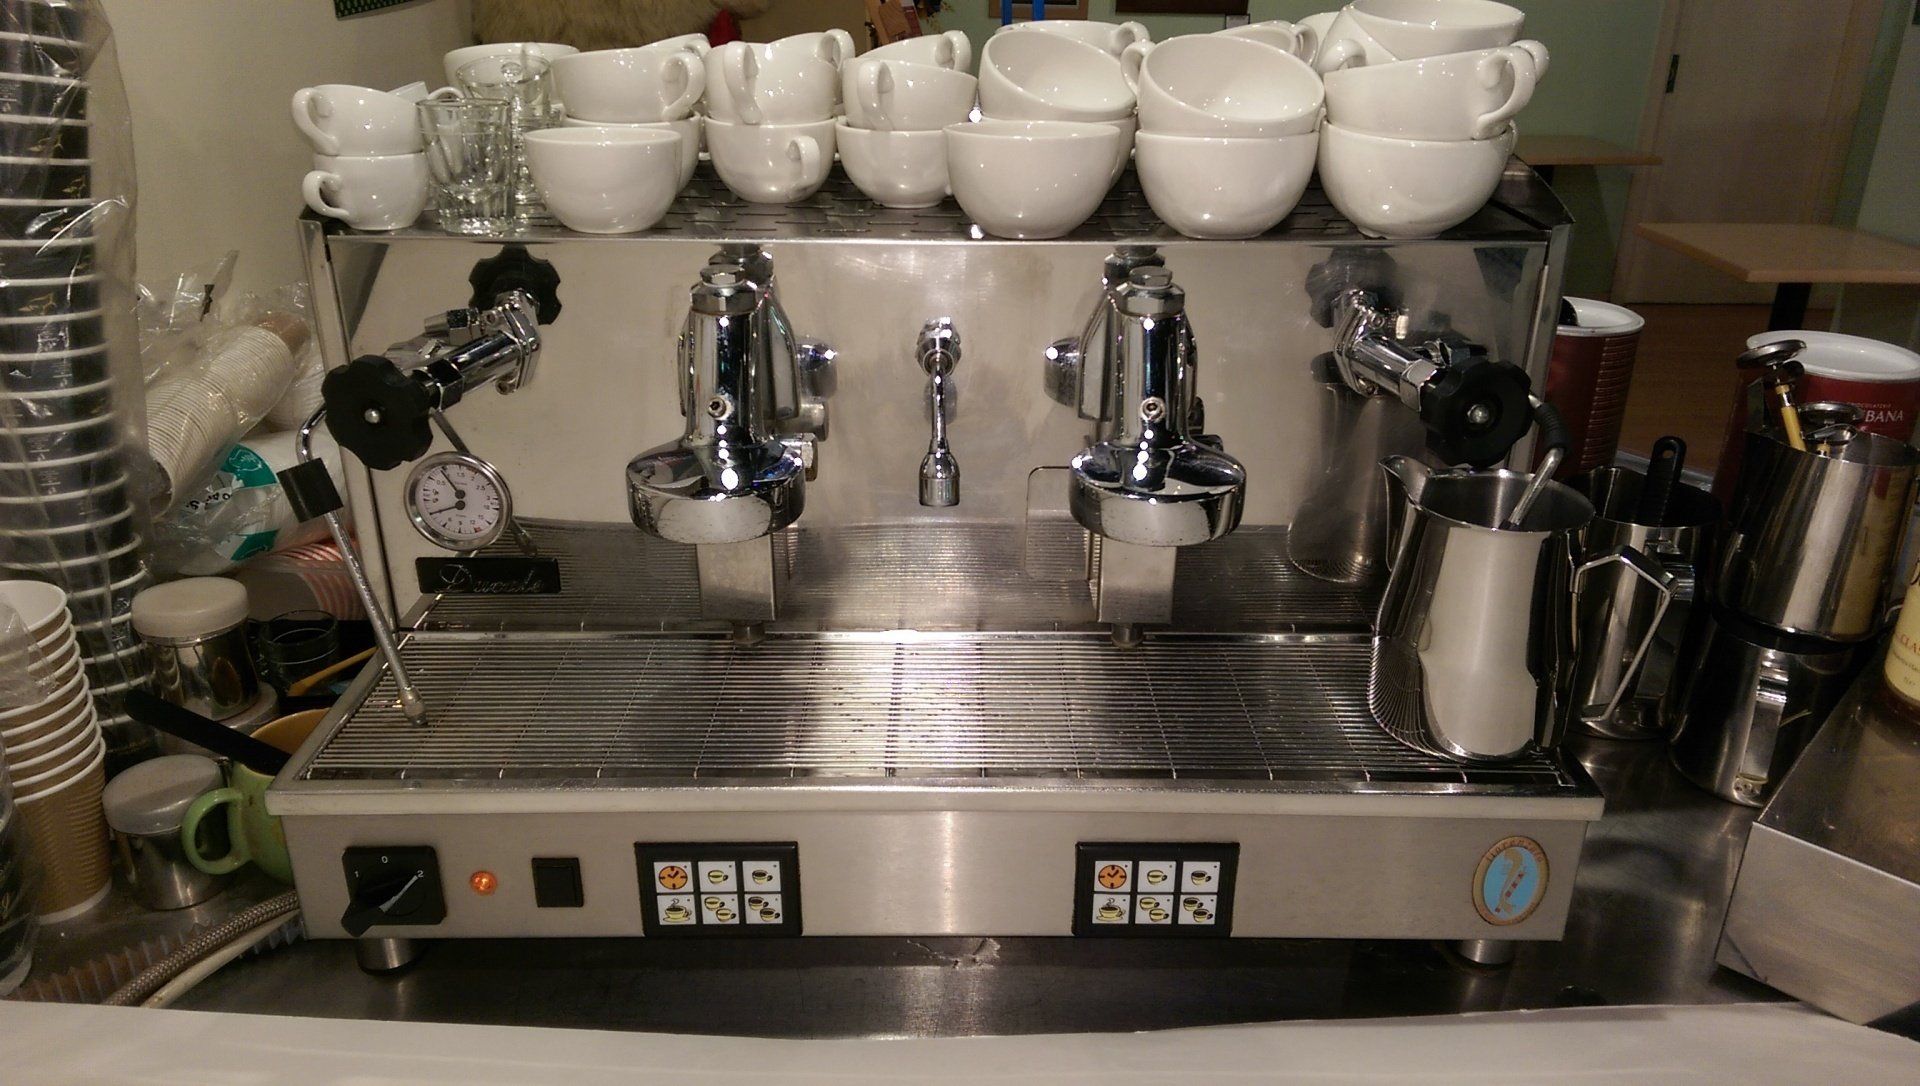 A 2 group espresso machine in a busy coffee shop